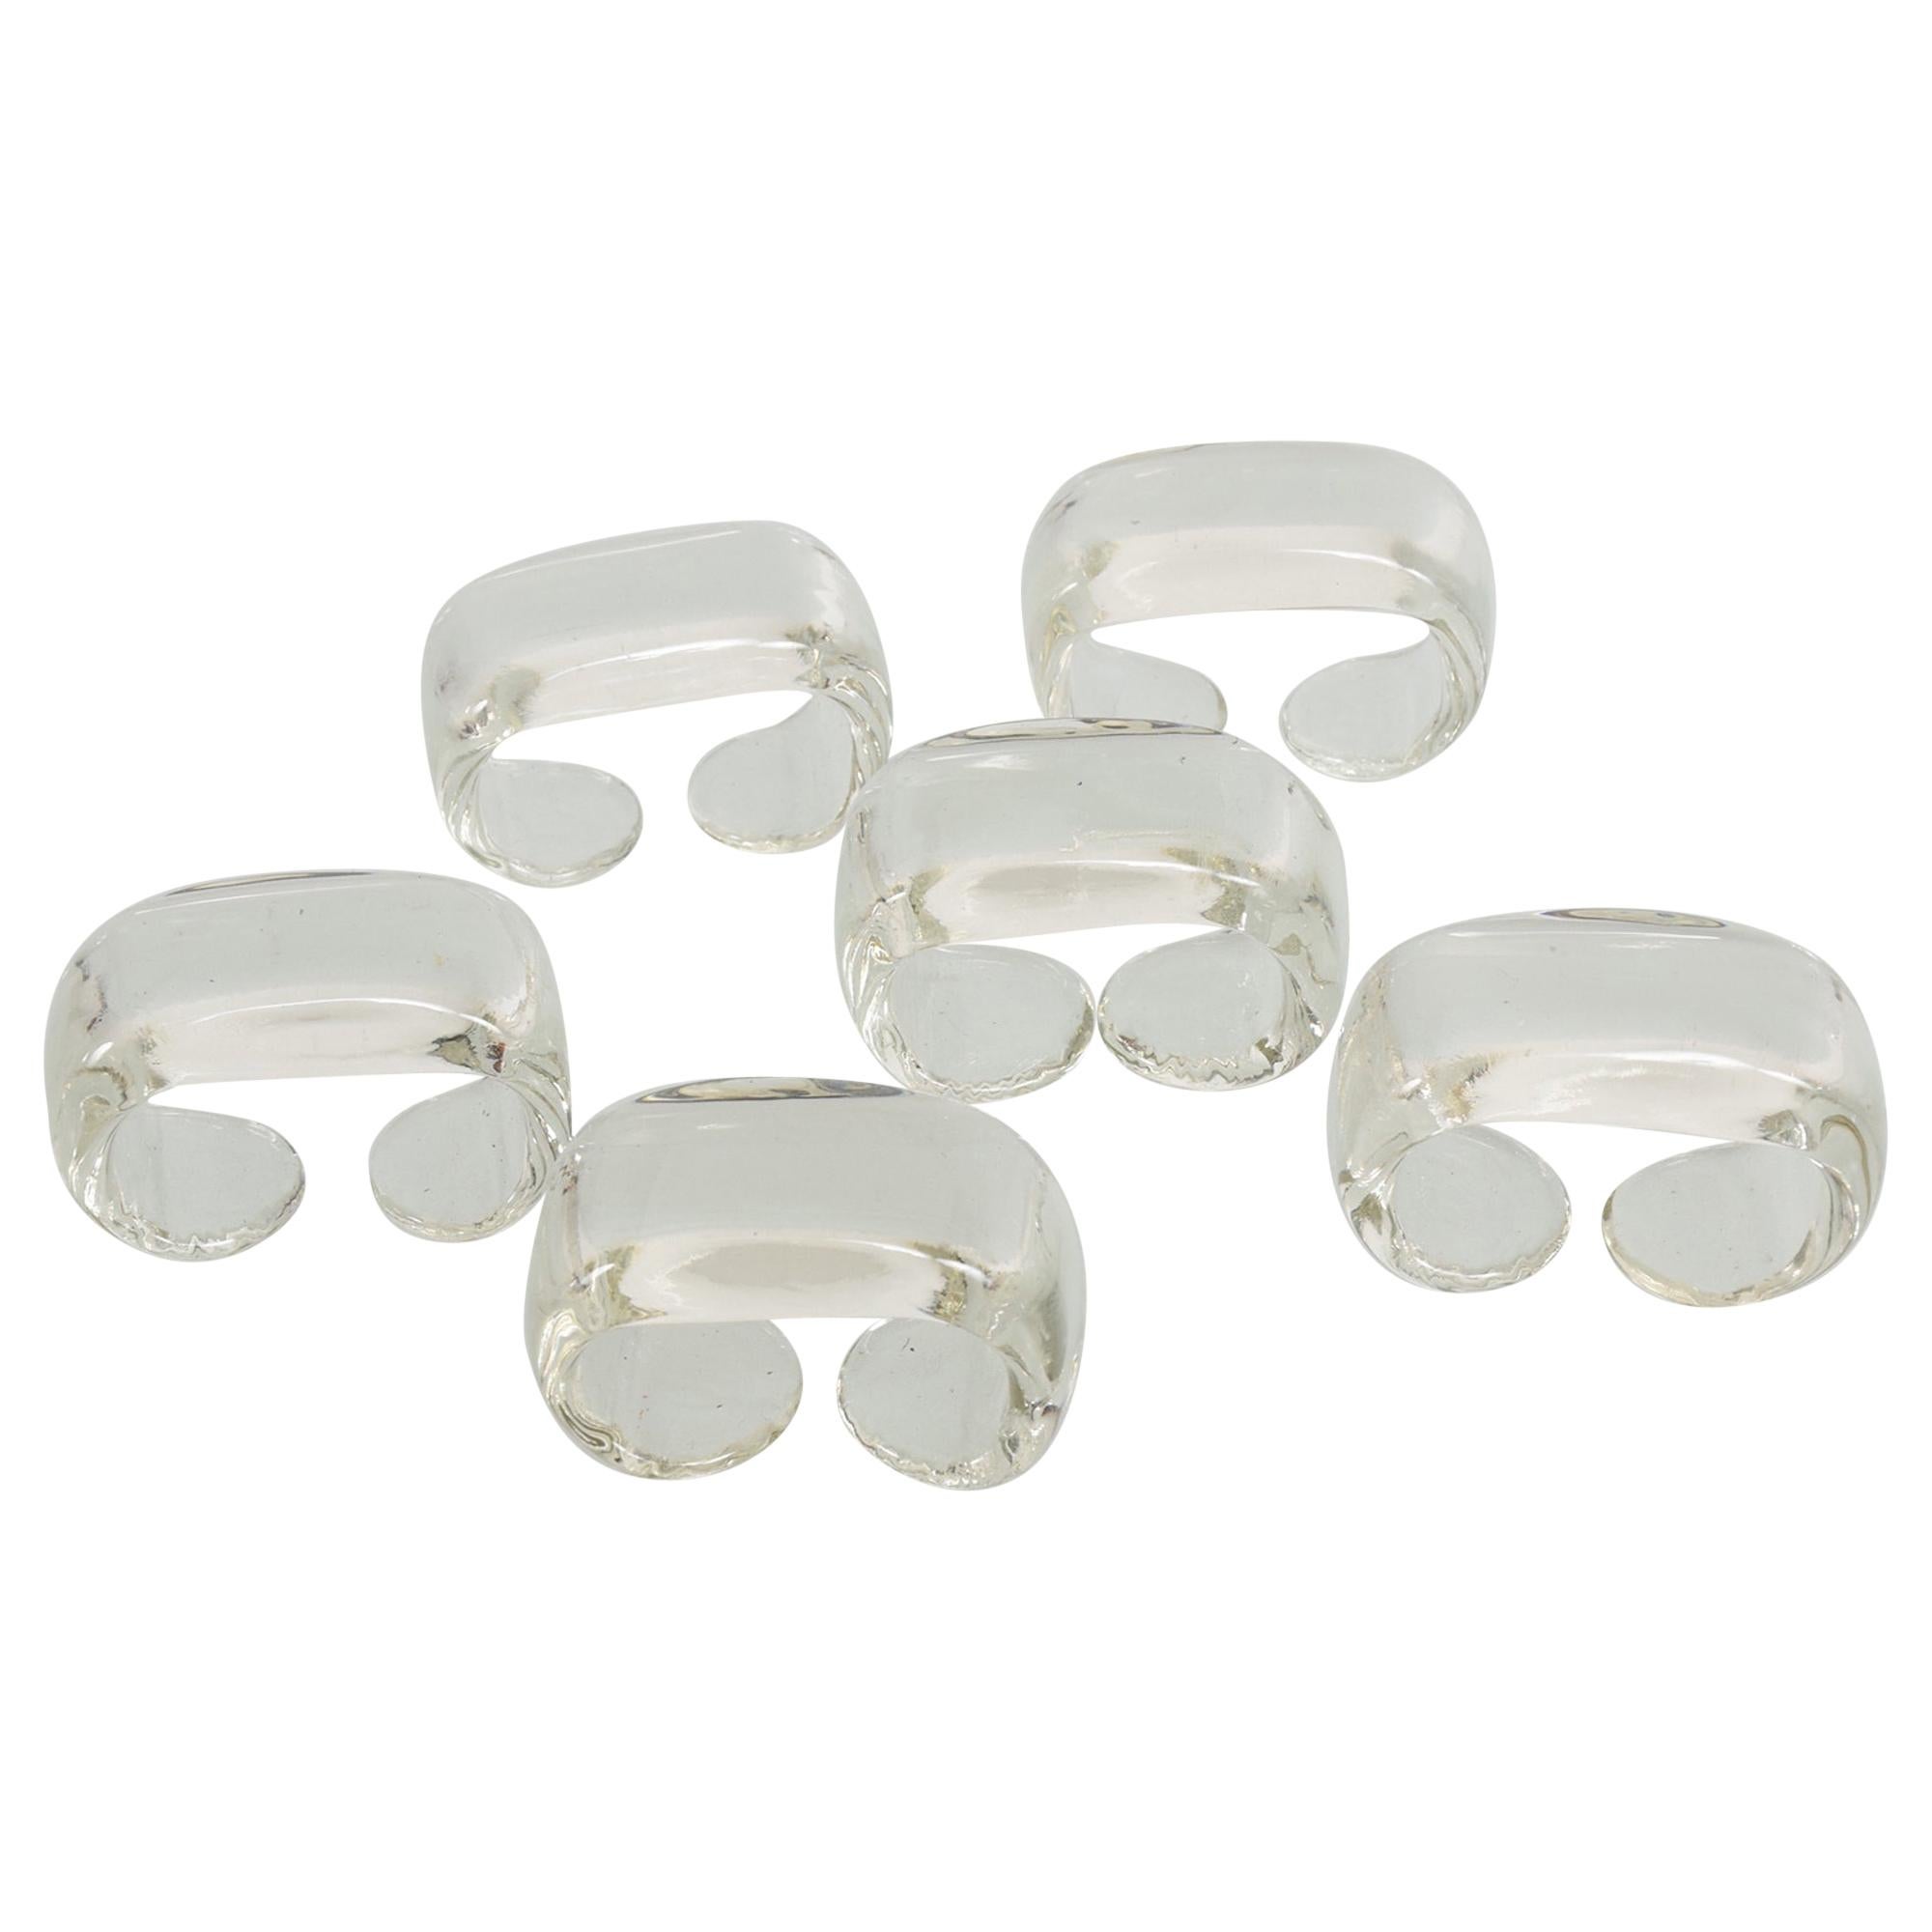 1960s Hollywood Regency Style  Daum France Art Glass Napkin Ring Holders - 6 -